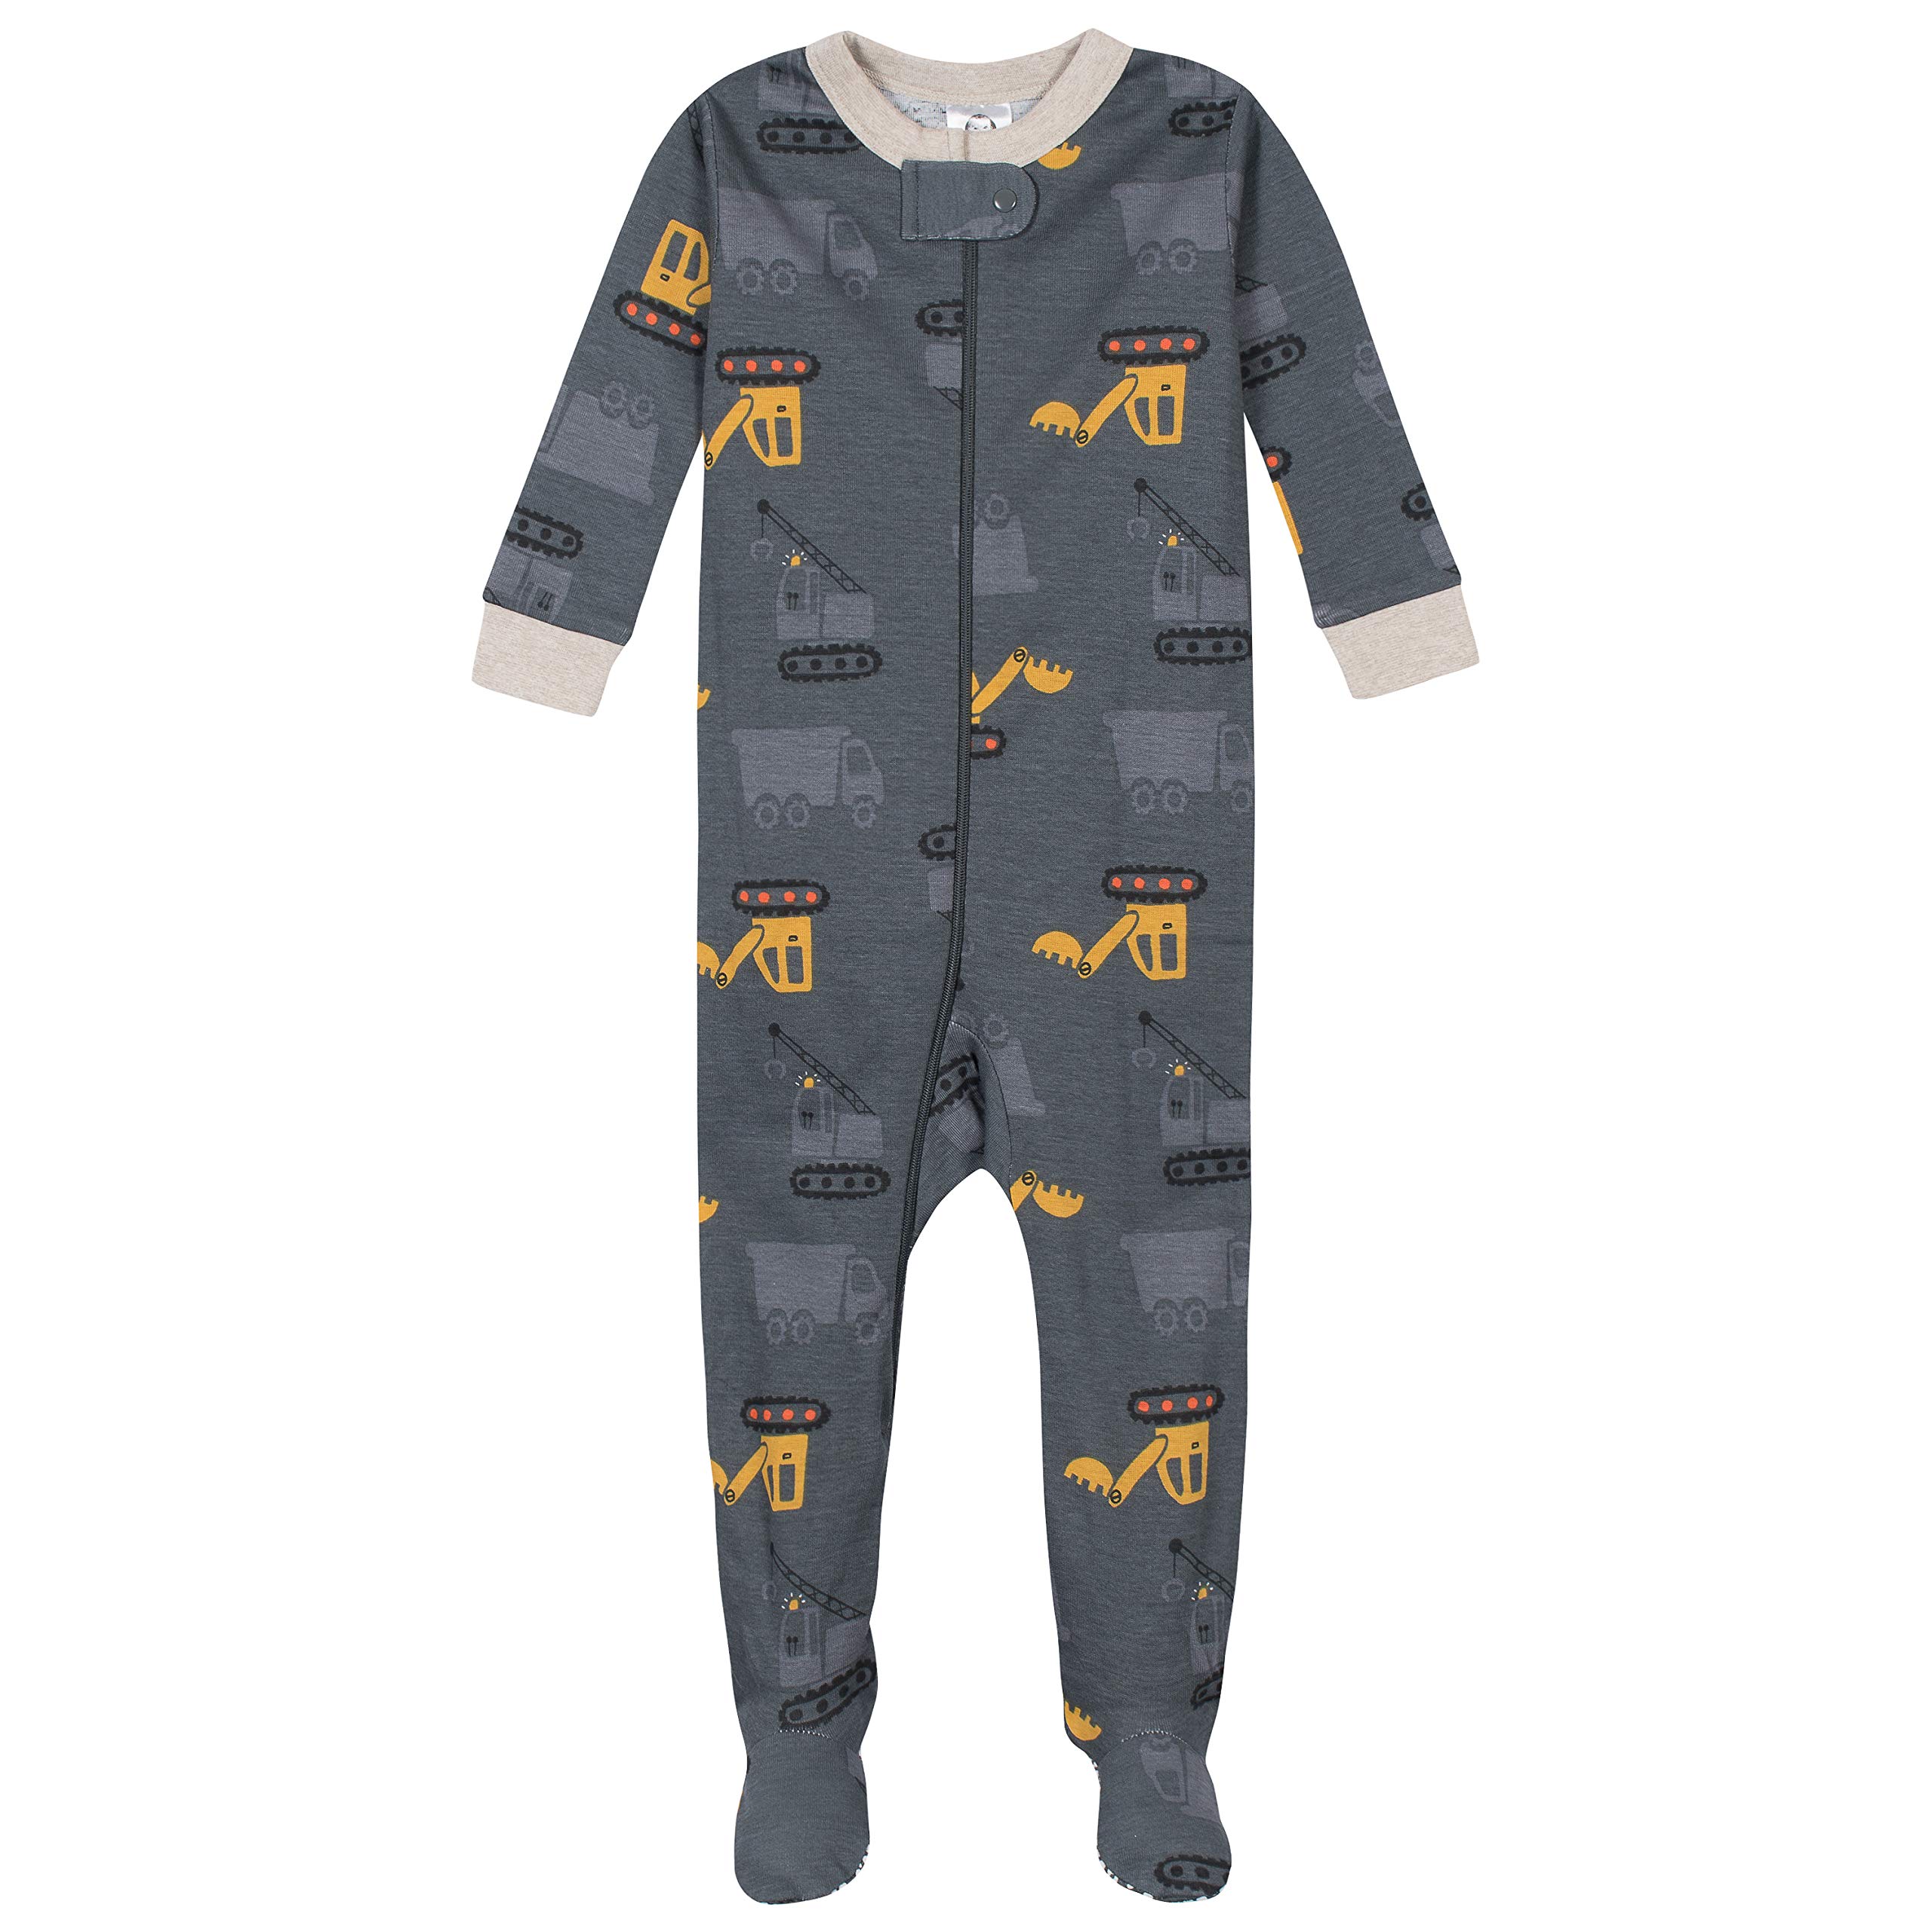 Gerber Baby Boys' 4-Pack Footed Pajamas